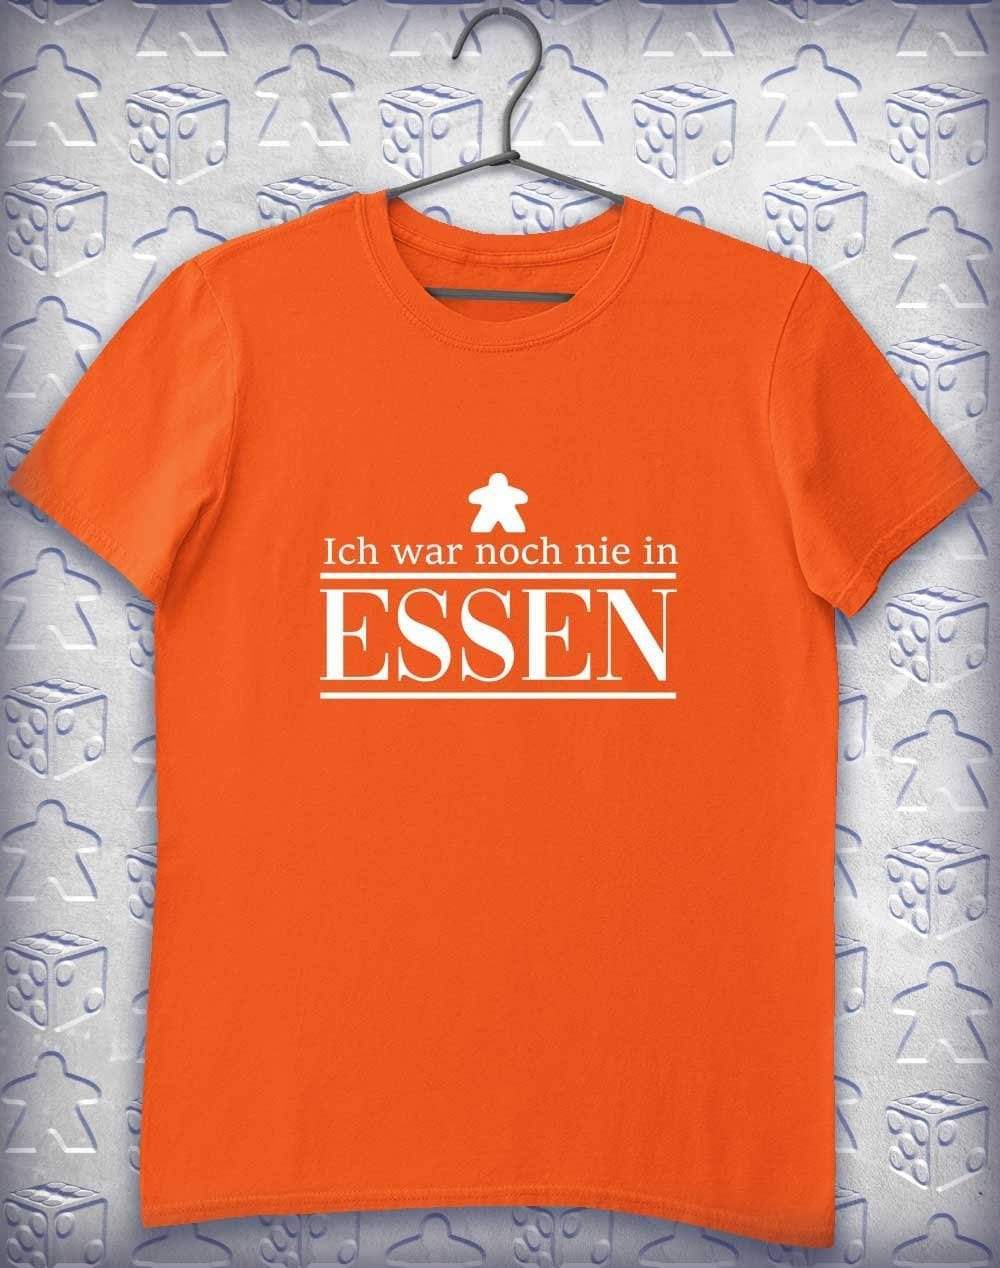 Never Been to Essen Alphagamer T-Shirt S / Orange  - Off World Tees